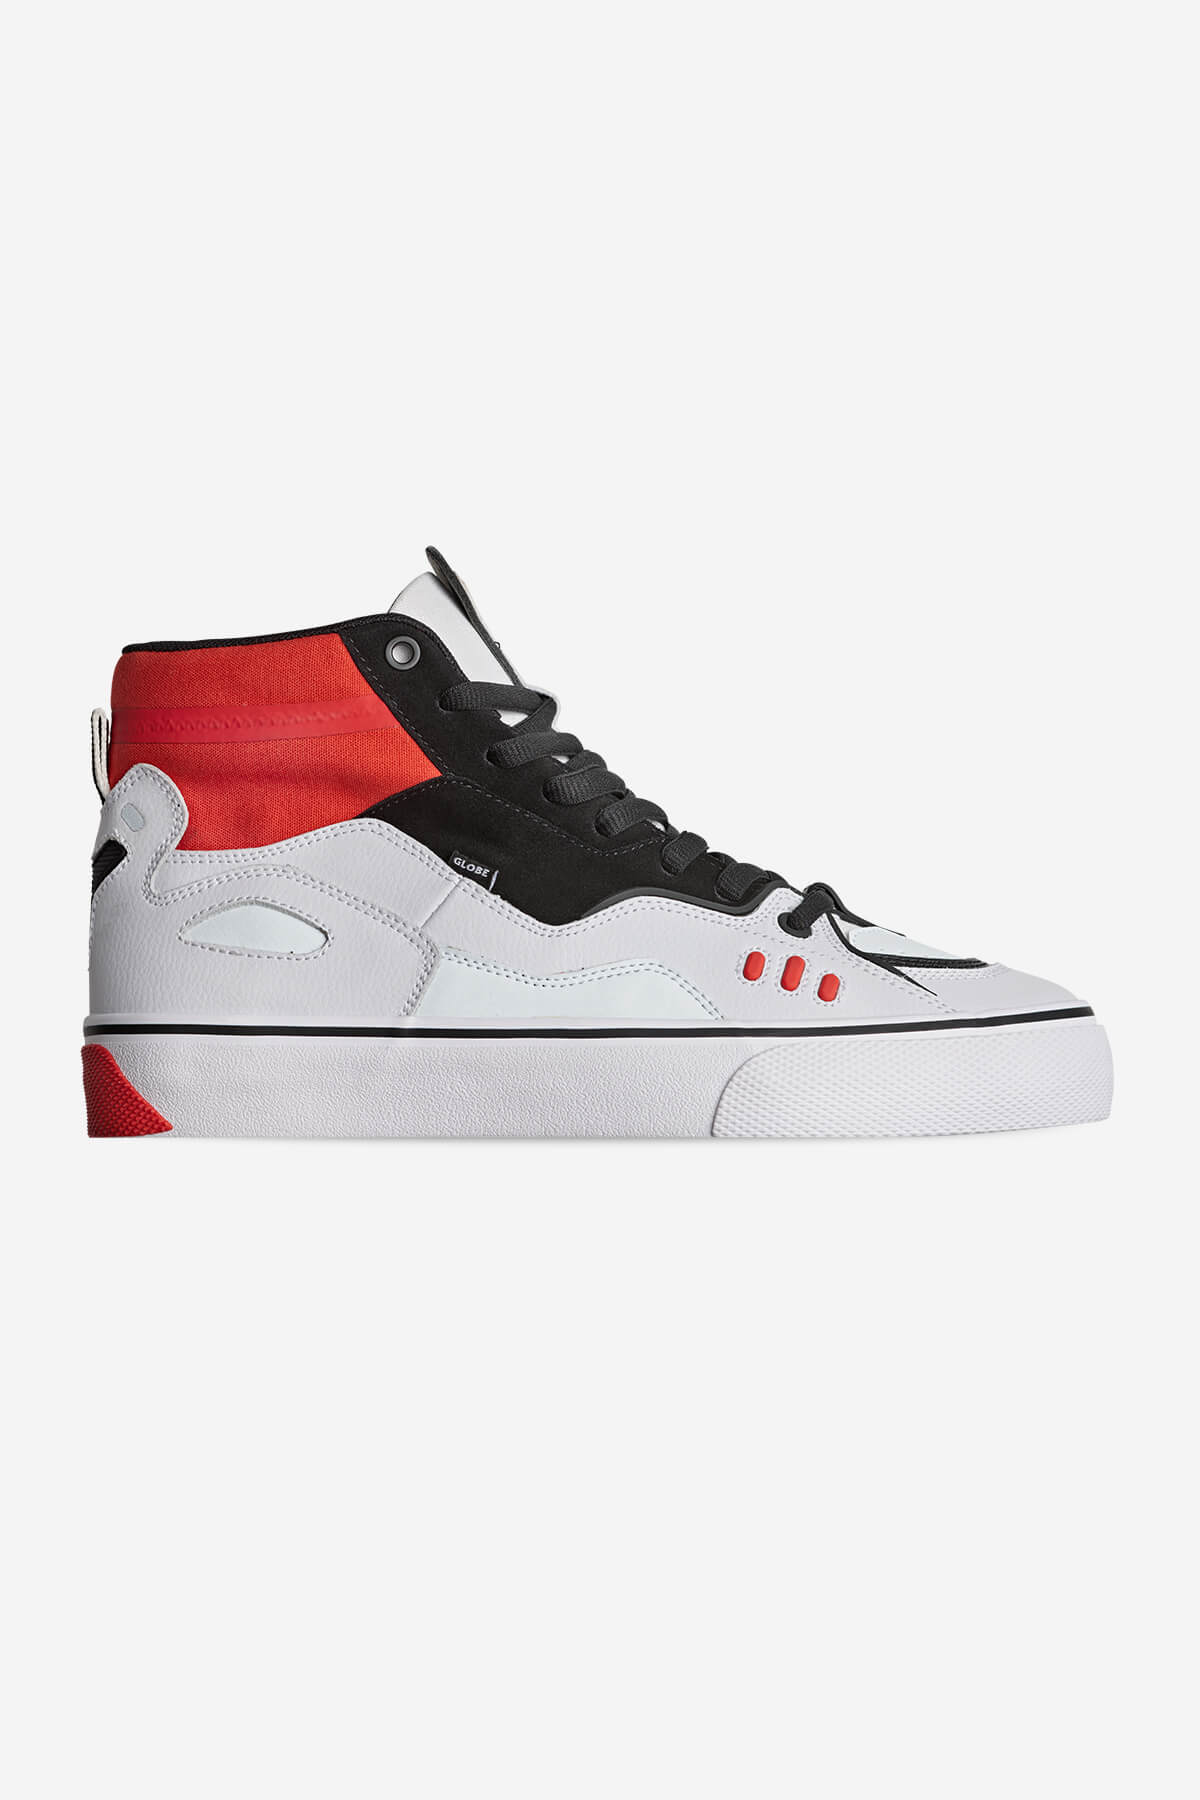 dimension white negro red skateboard  zapatos